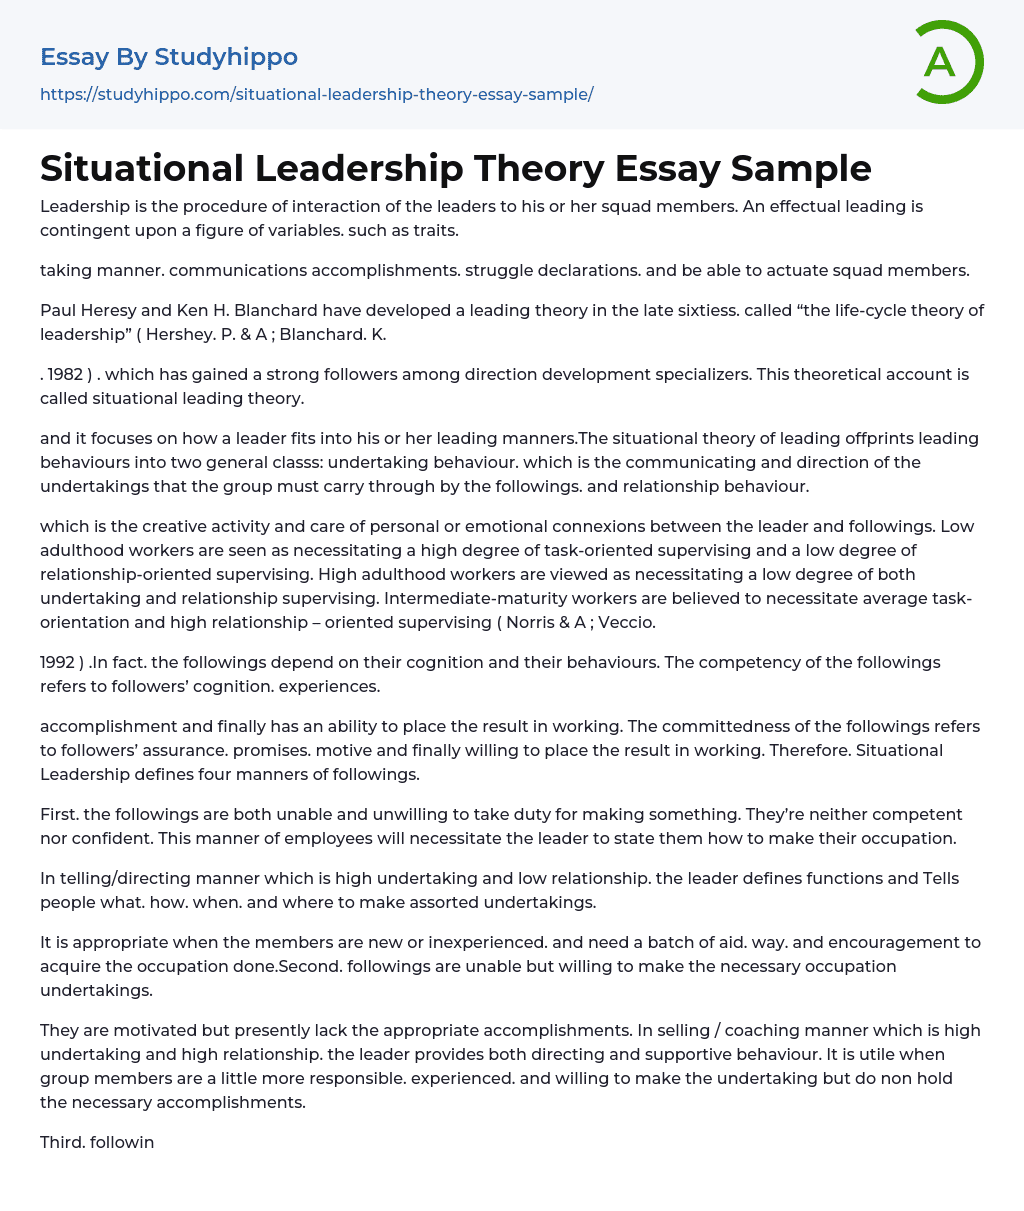 Situational Leadership Theory Essay Sample